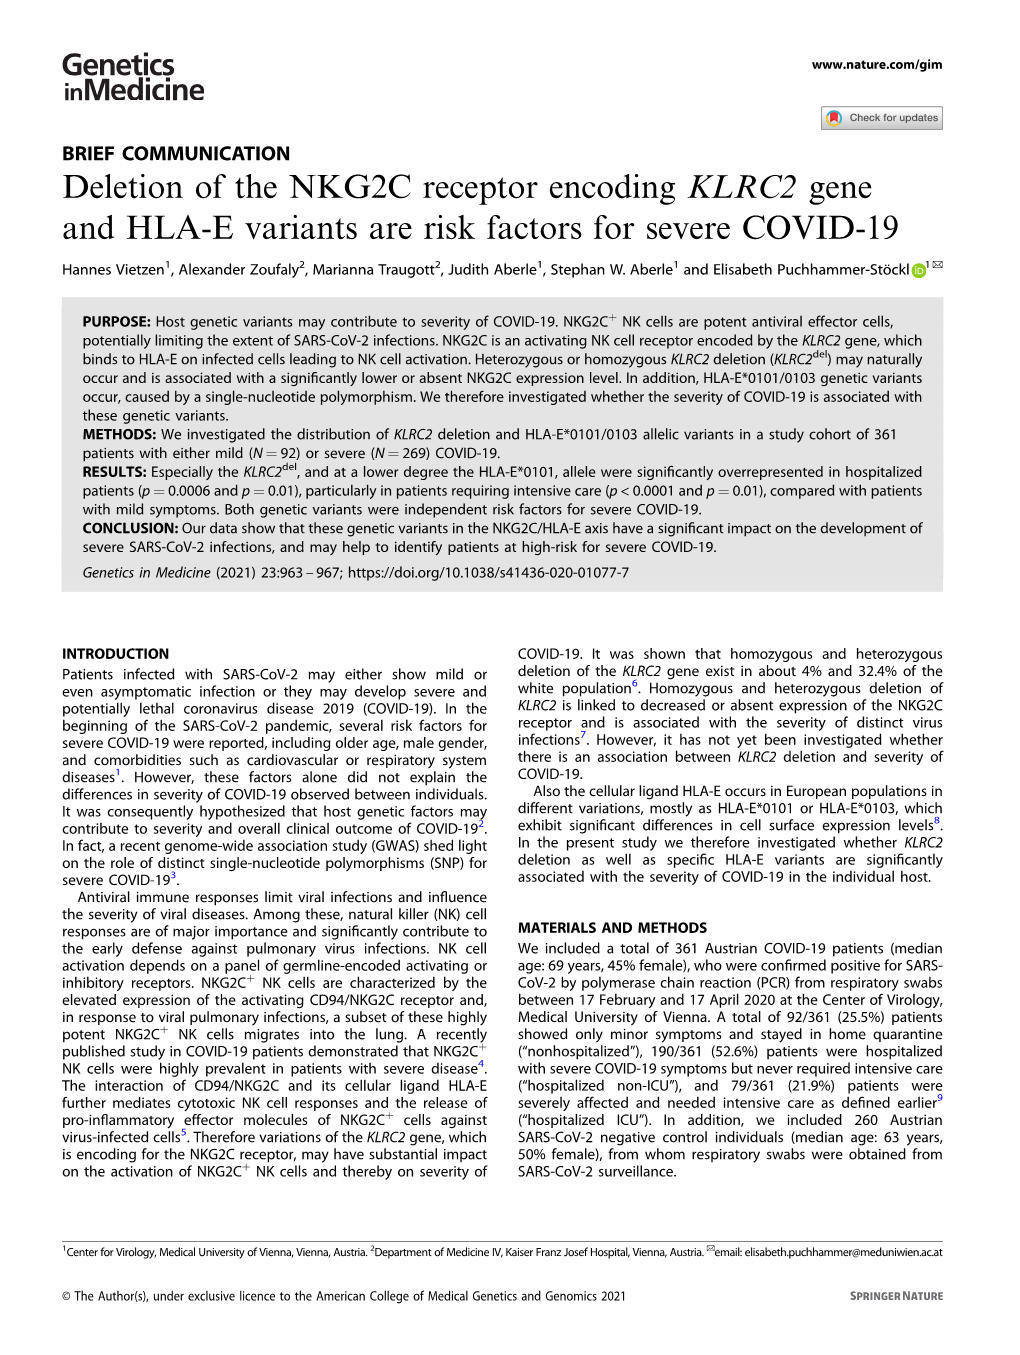 Deletion of the NKG2C Receptor Encoding KLRC2 Gene and HLA-E